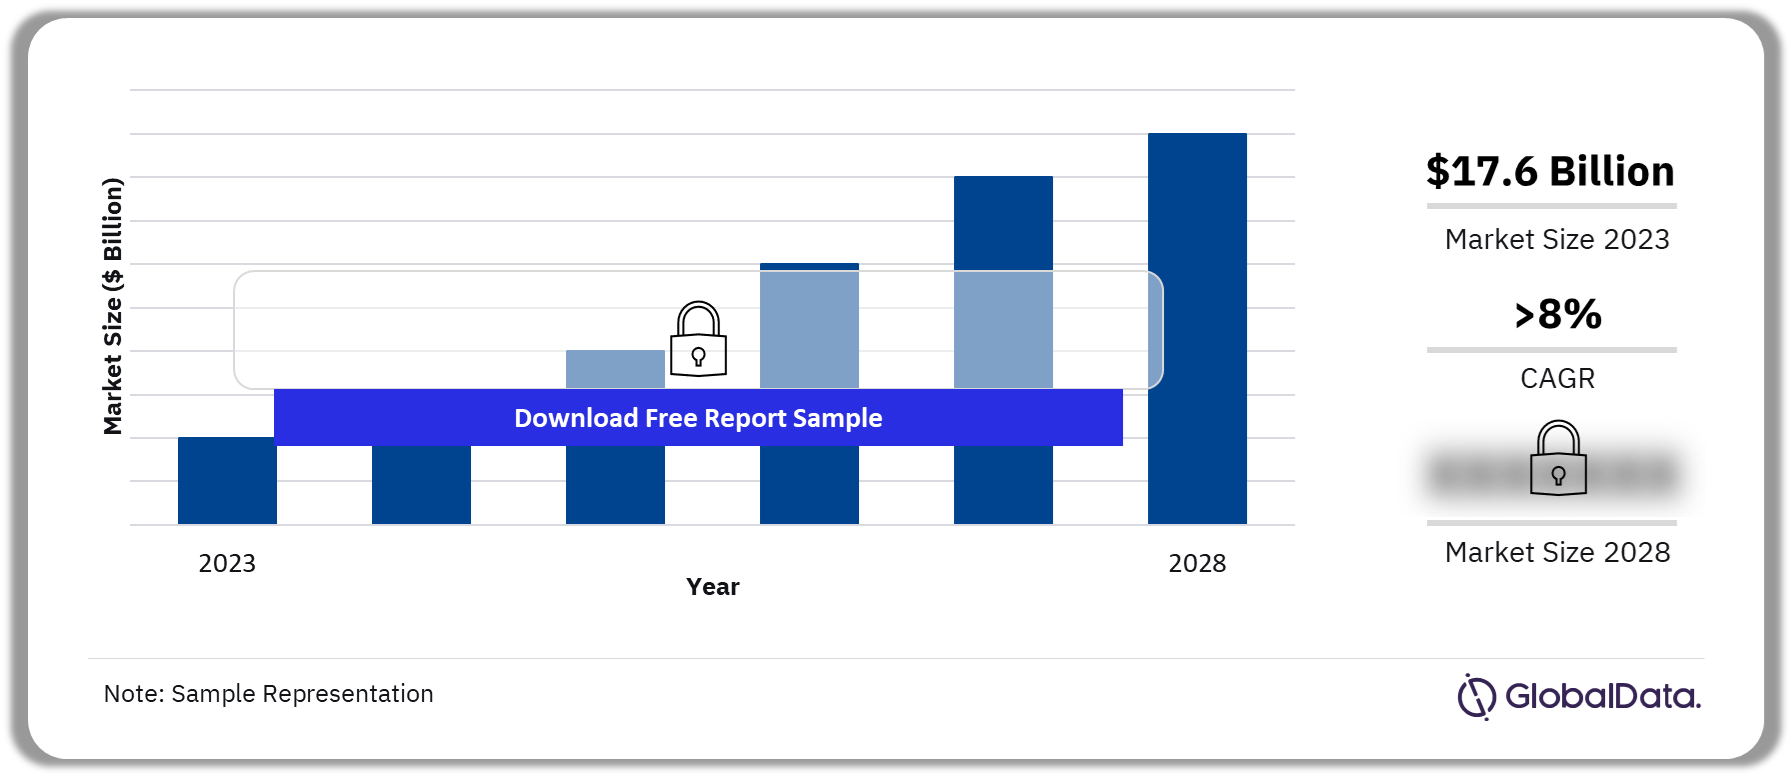 MEA Fixed Broadband Market Outlook 2023-2028 ($ Billion)